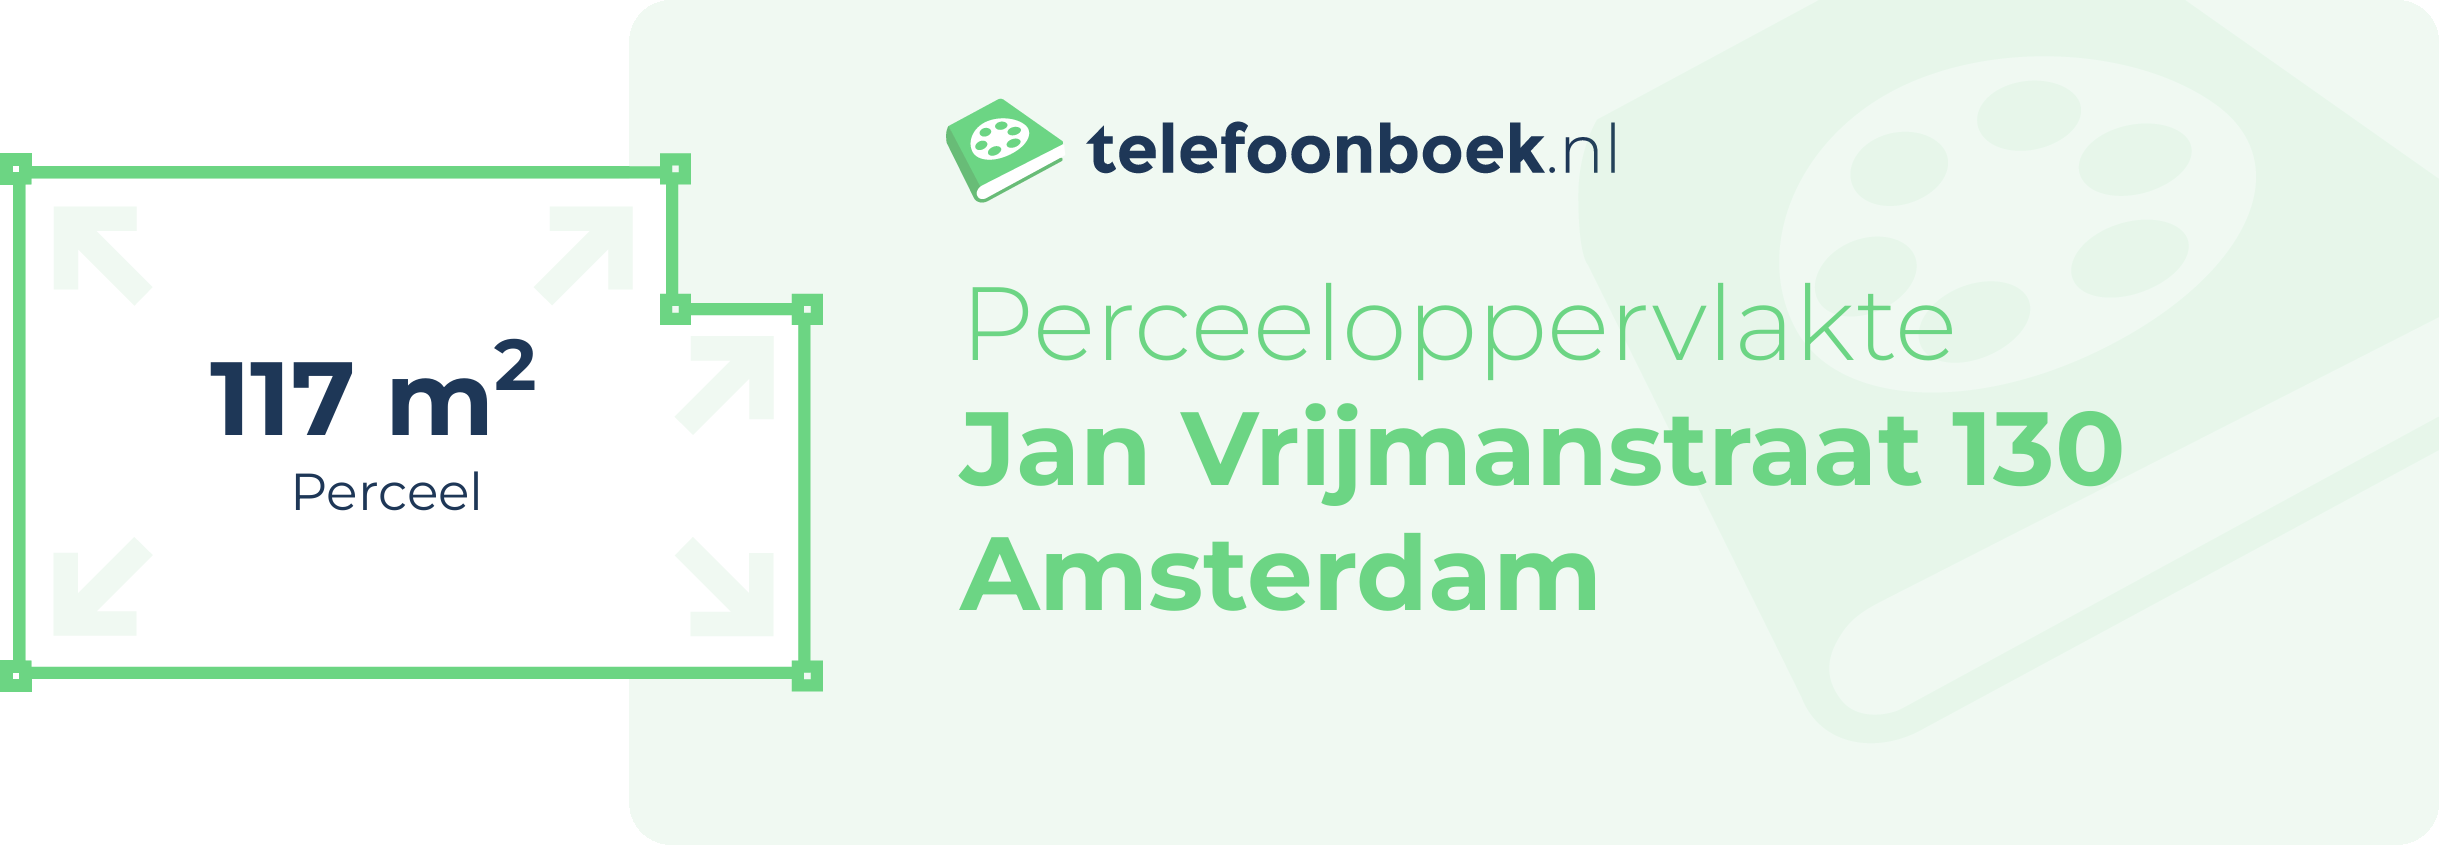 Perceeloppervlakte Jan Vrijmanstraat 130 Amsterdam